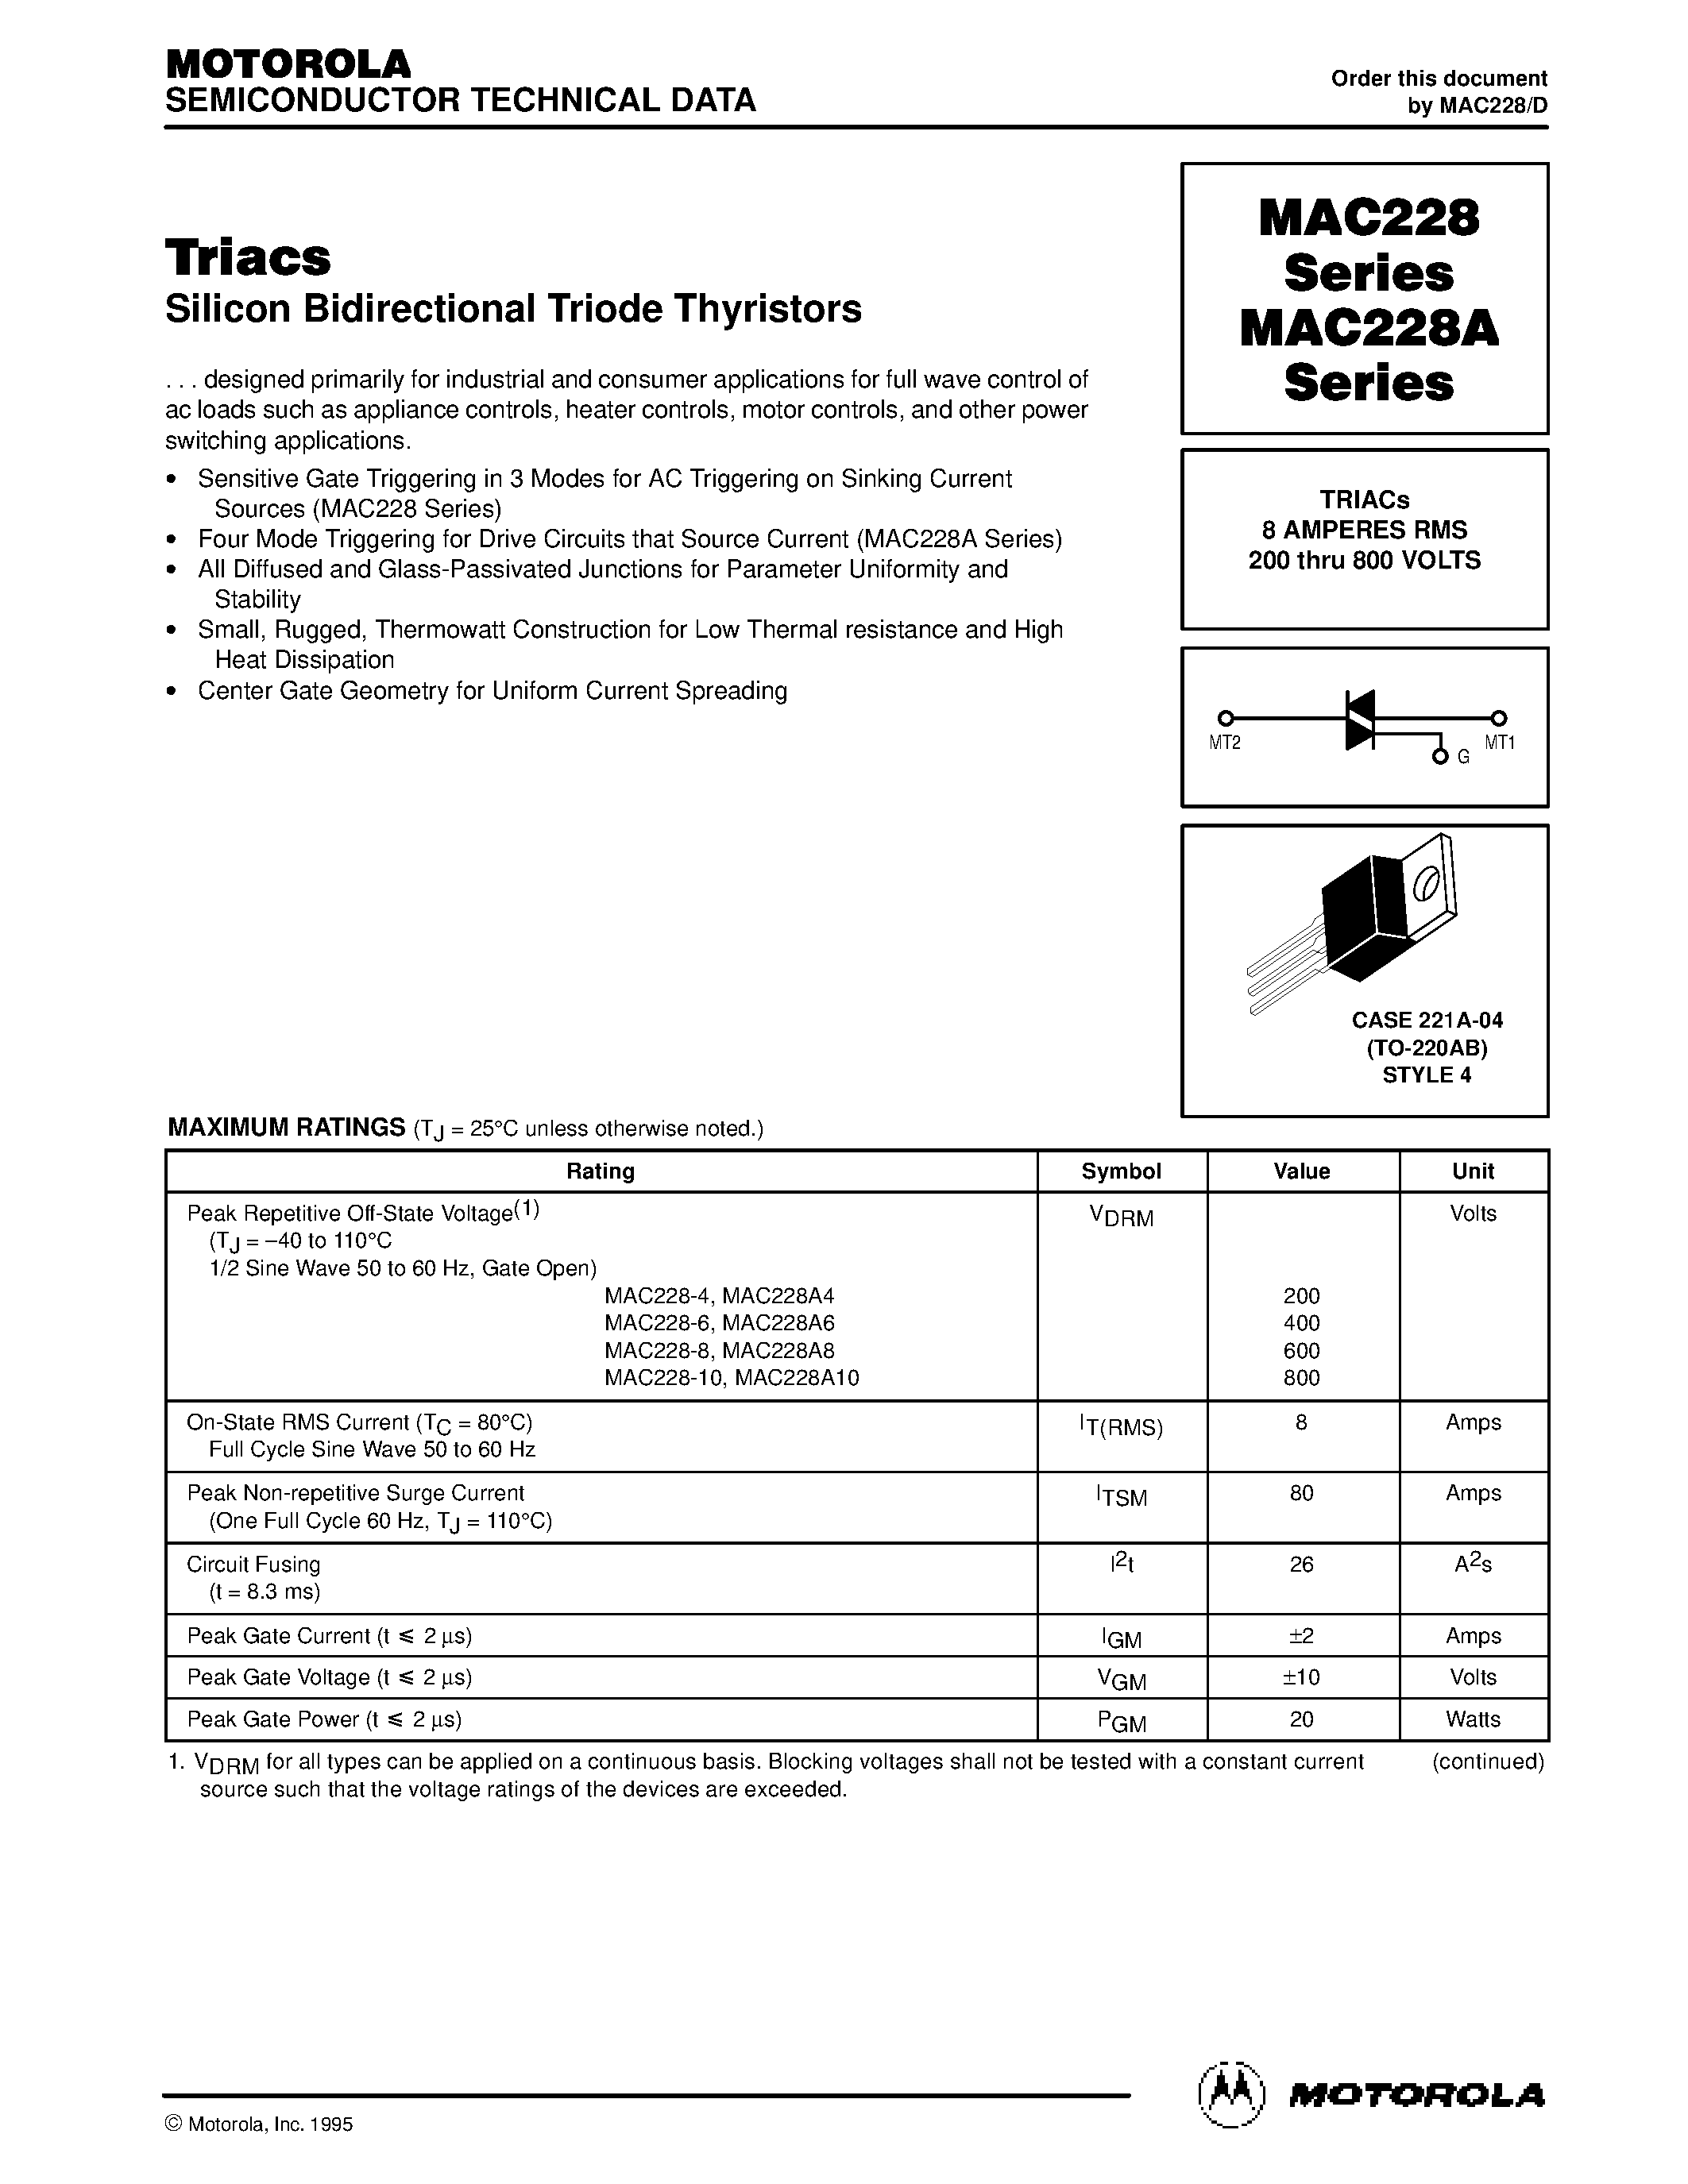 Datasheet MAC228-8 - TRIACs 8 AMPERES RMS 200 thru 800 VOLTS page 1